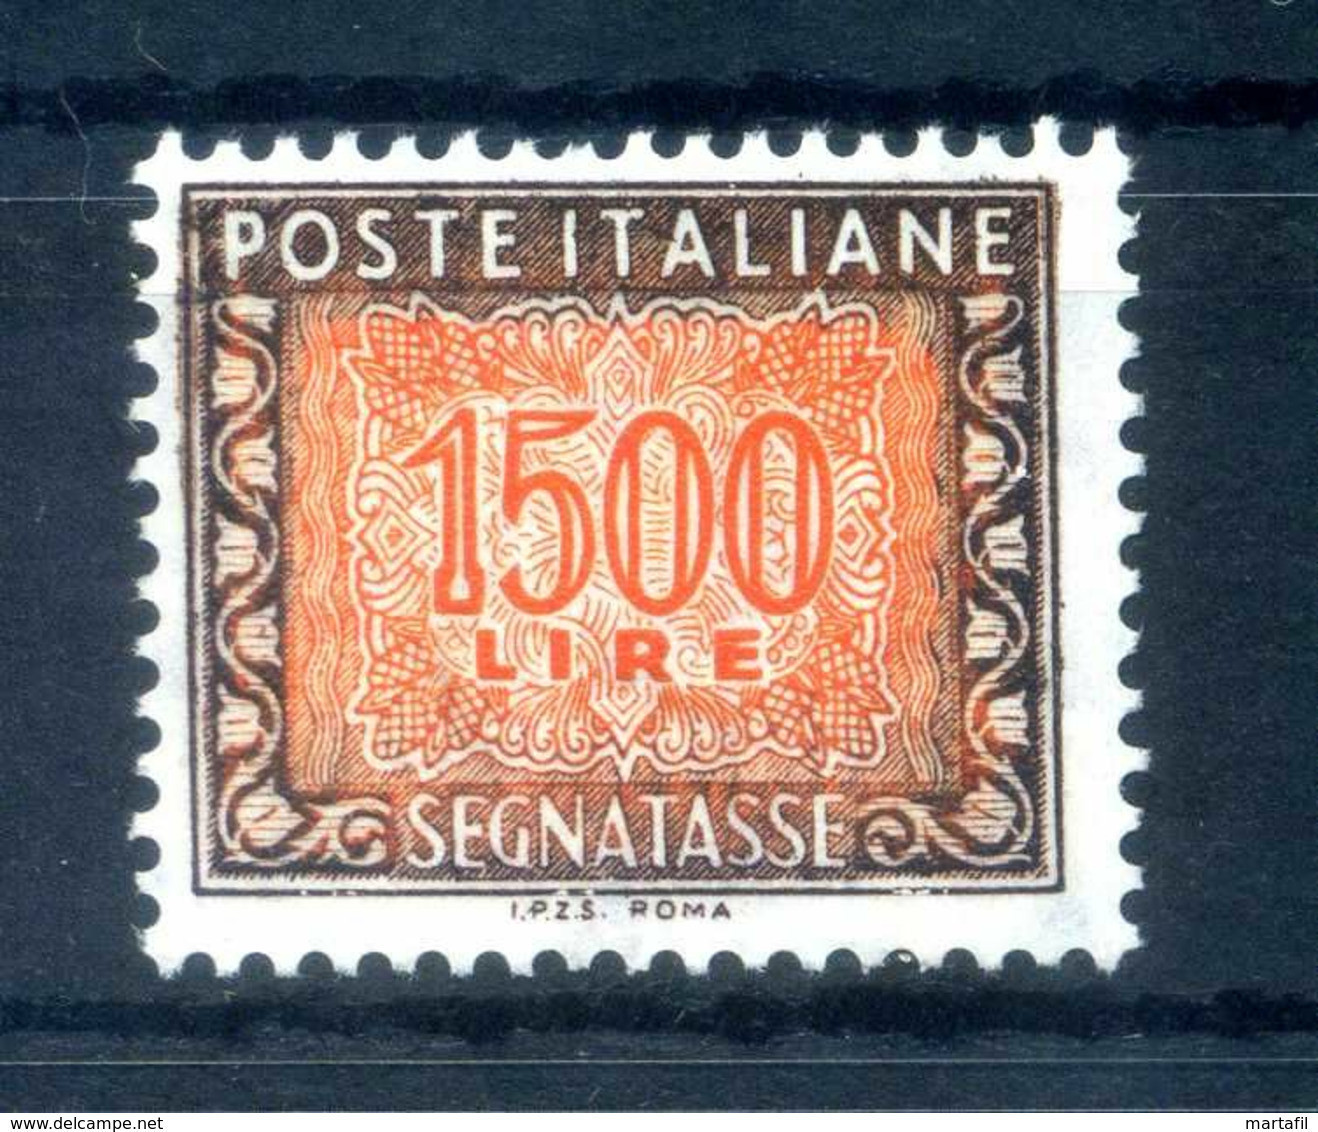 1955-81 REPUBBLICA SEGNATASSE 1500 Lire MNH ** N.125 - Segnatasse